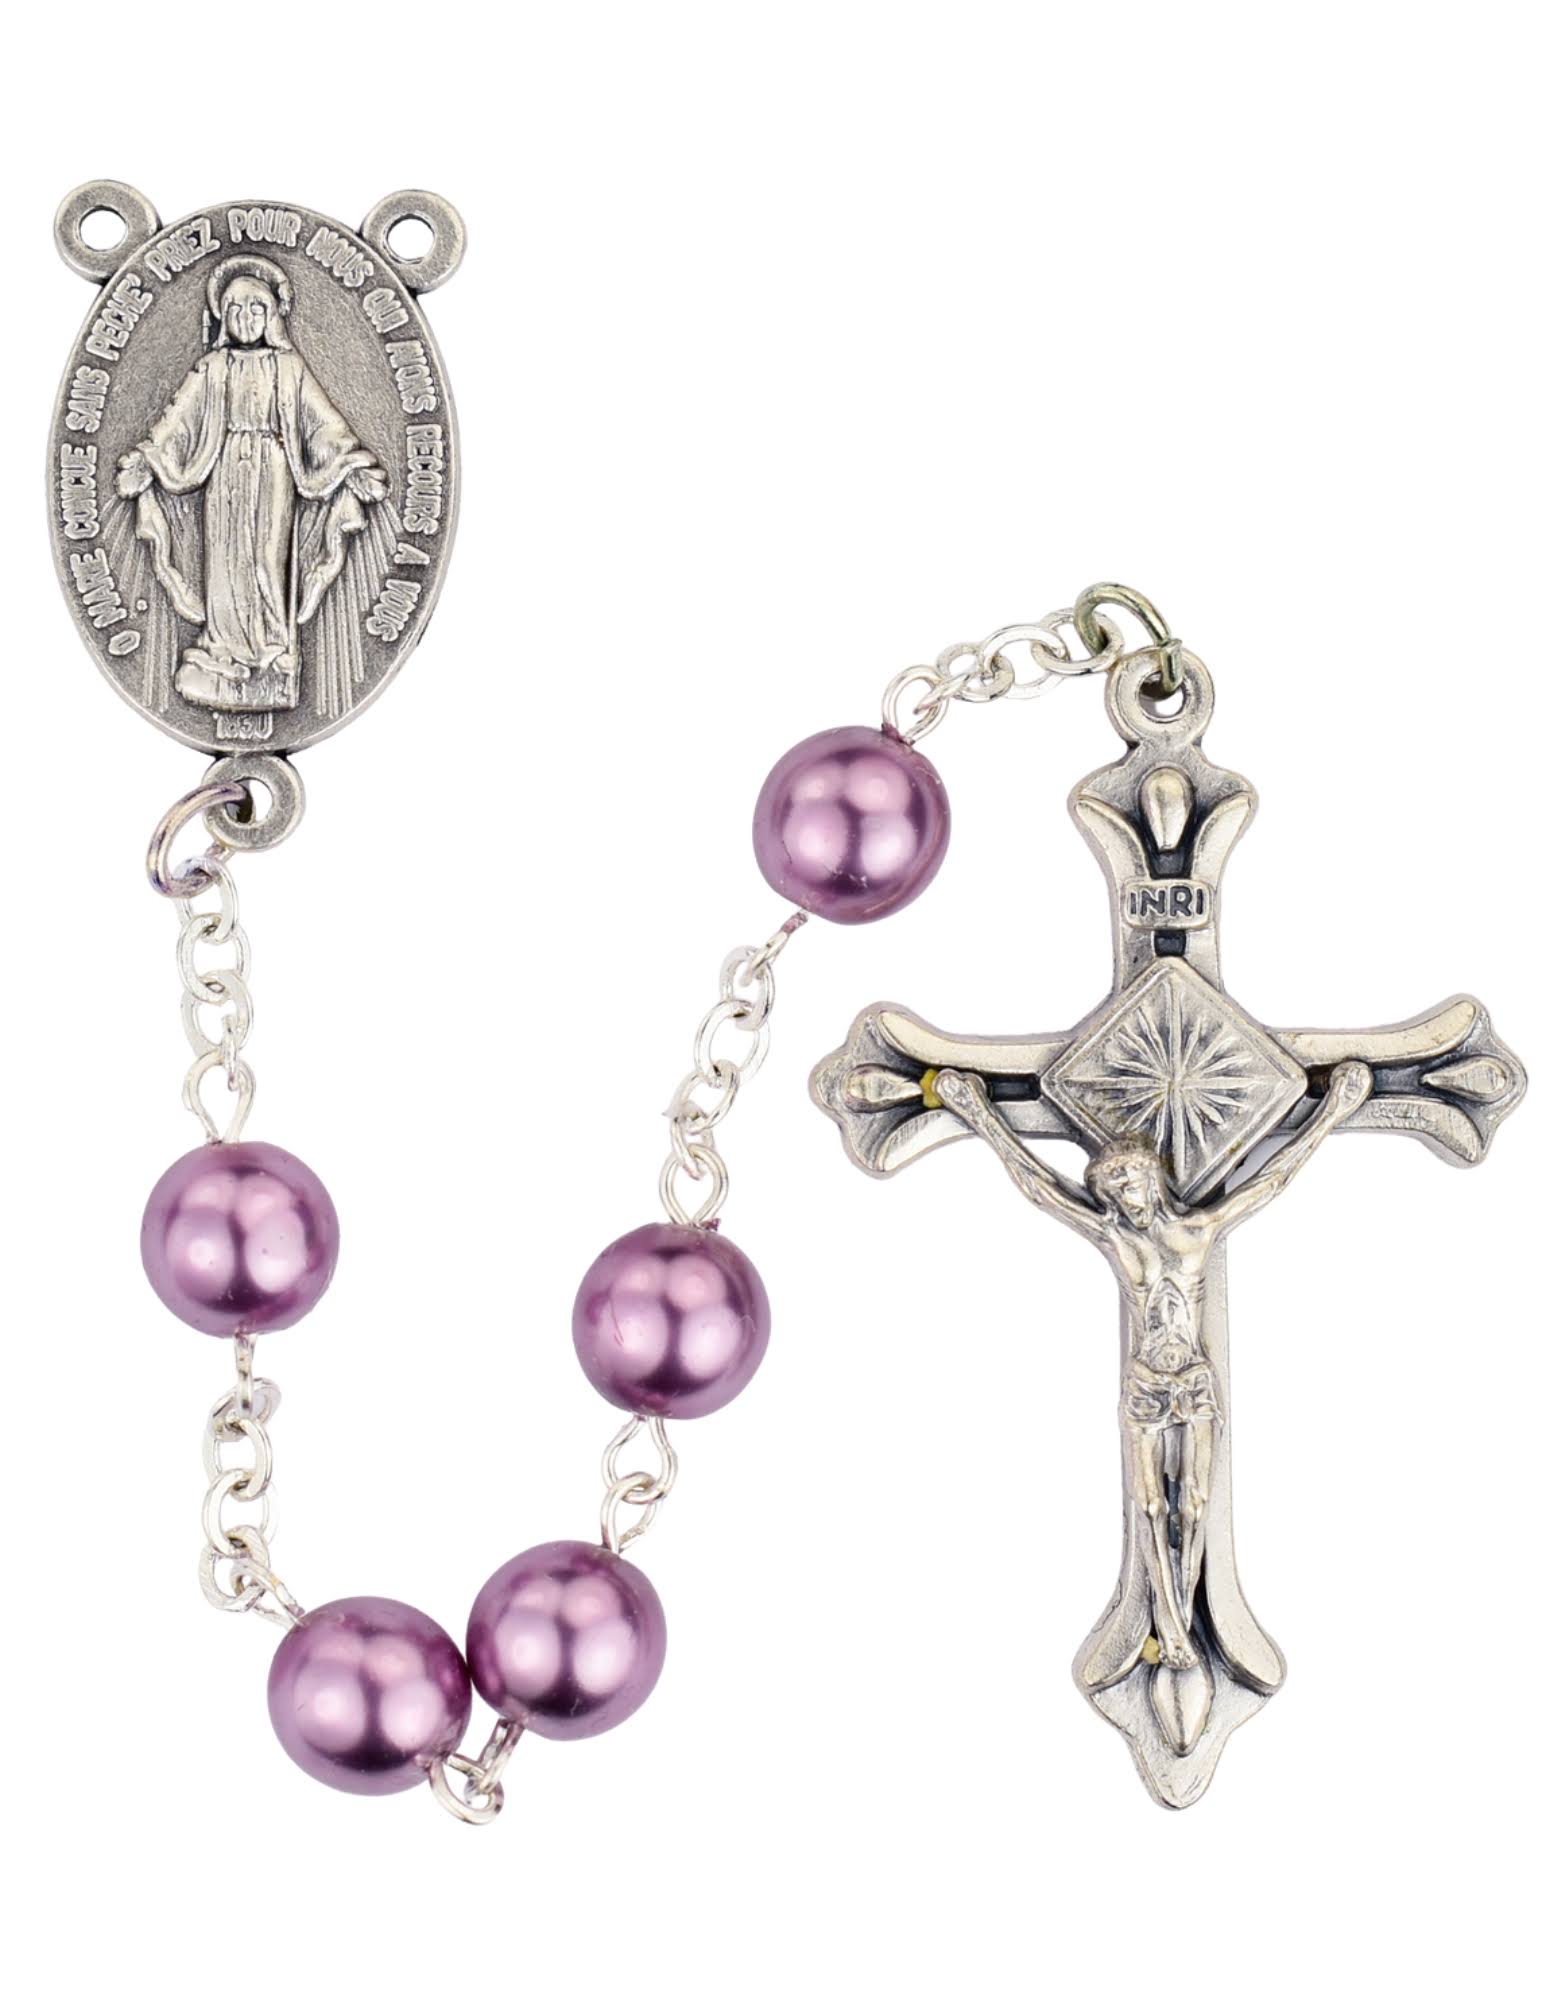 6mm Purple Pearl Beads Rosary